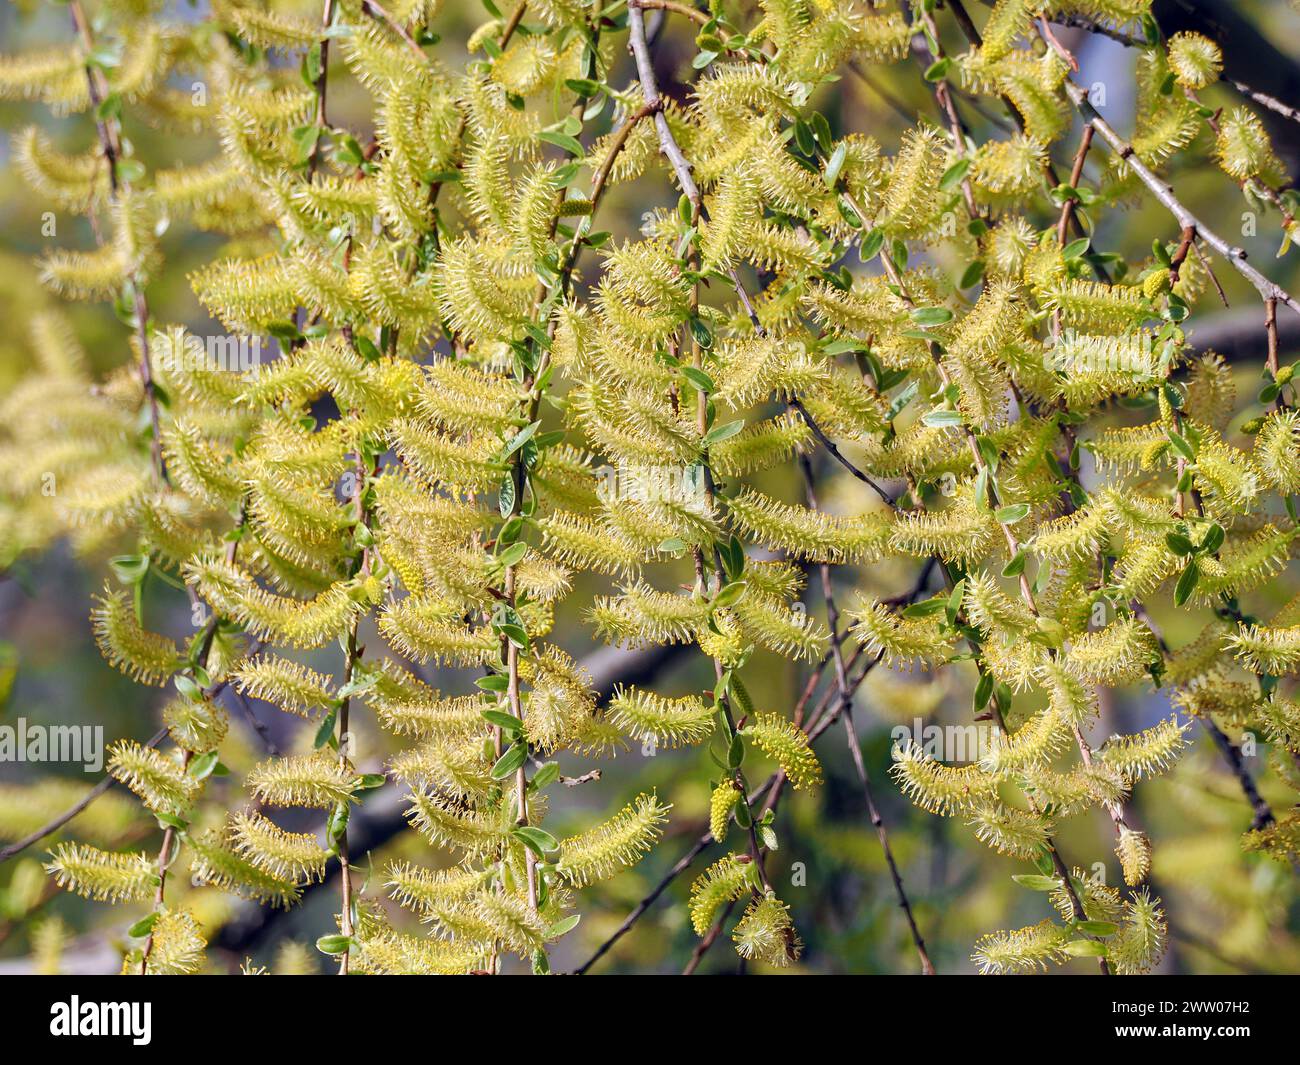 Weeping Golden Willow, Silber-Weide, Saule commun, Salix alba Tristis, szomorúfűz, Budapest, Hungary, Magyarország, Europe Stock Photo